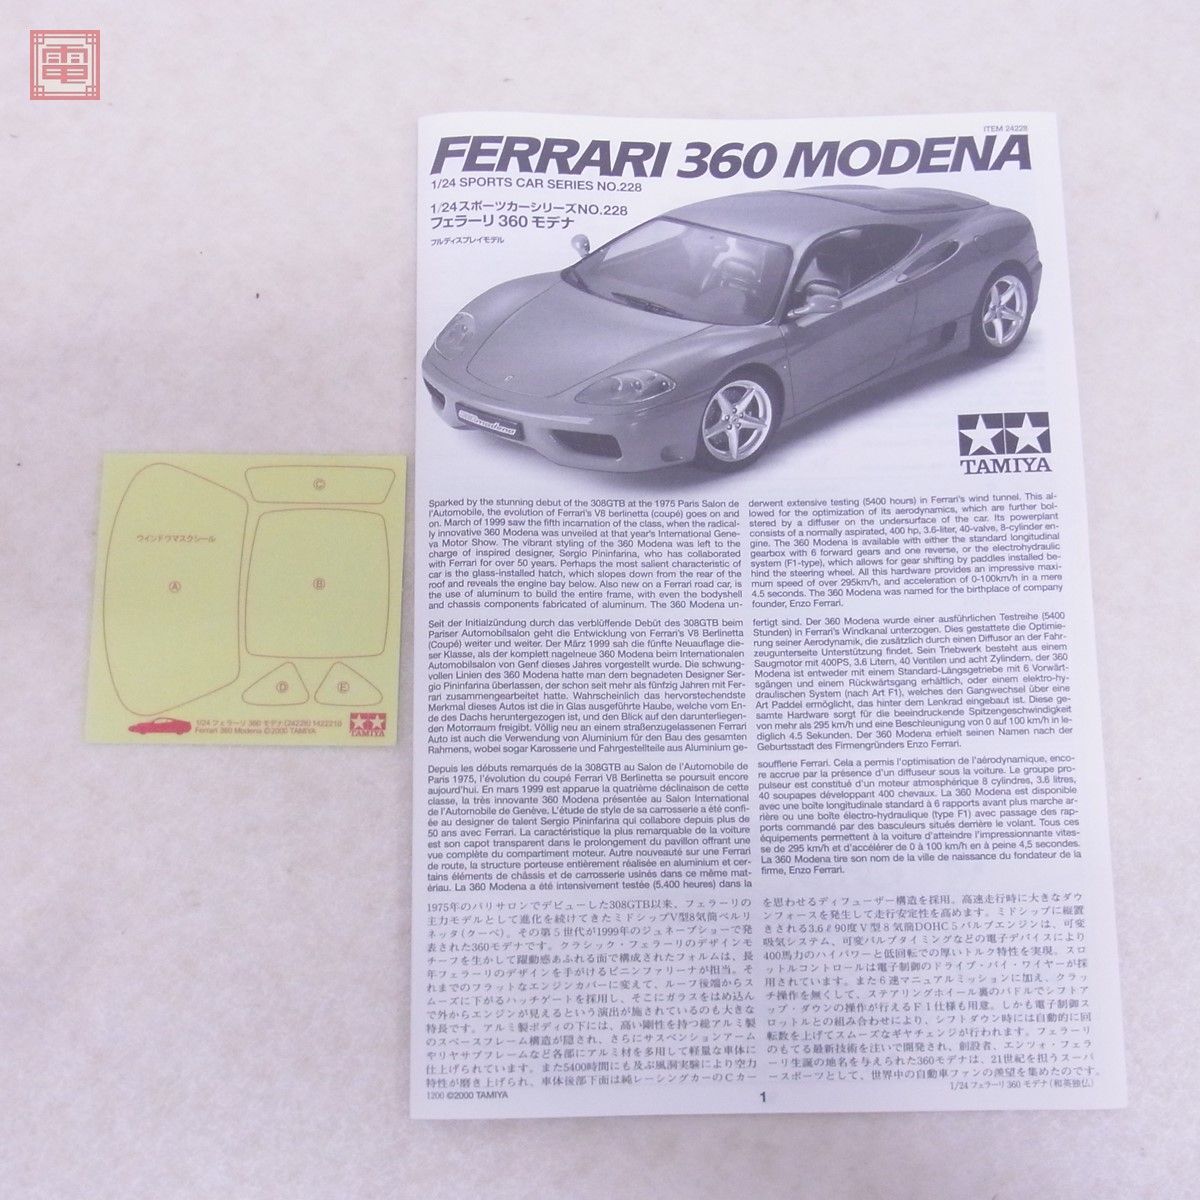  не собран Tamiya 1/24 Ferrari 360 modena спорт машина серии NO.228 TAMIYA FERRARI MODENA[20